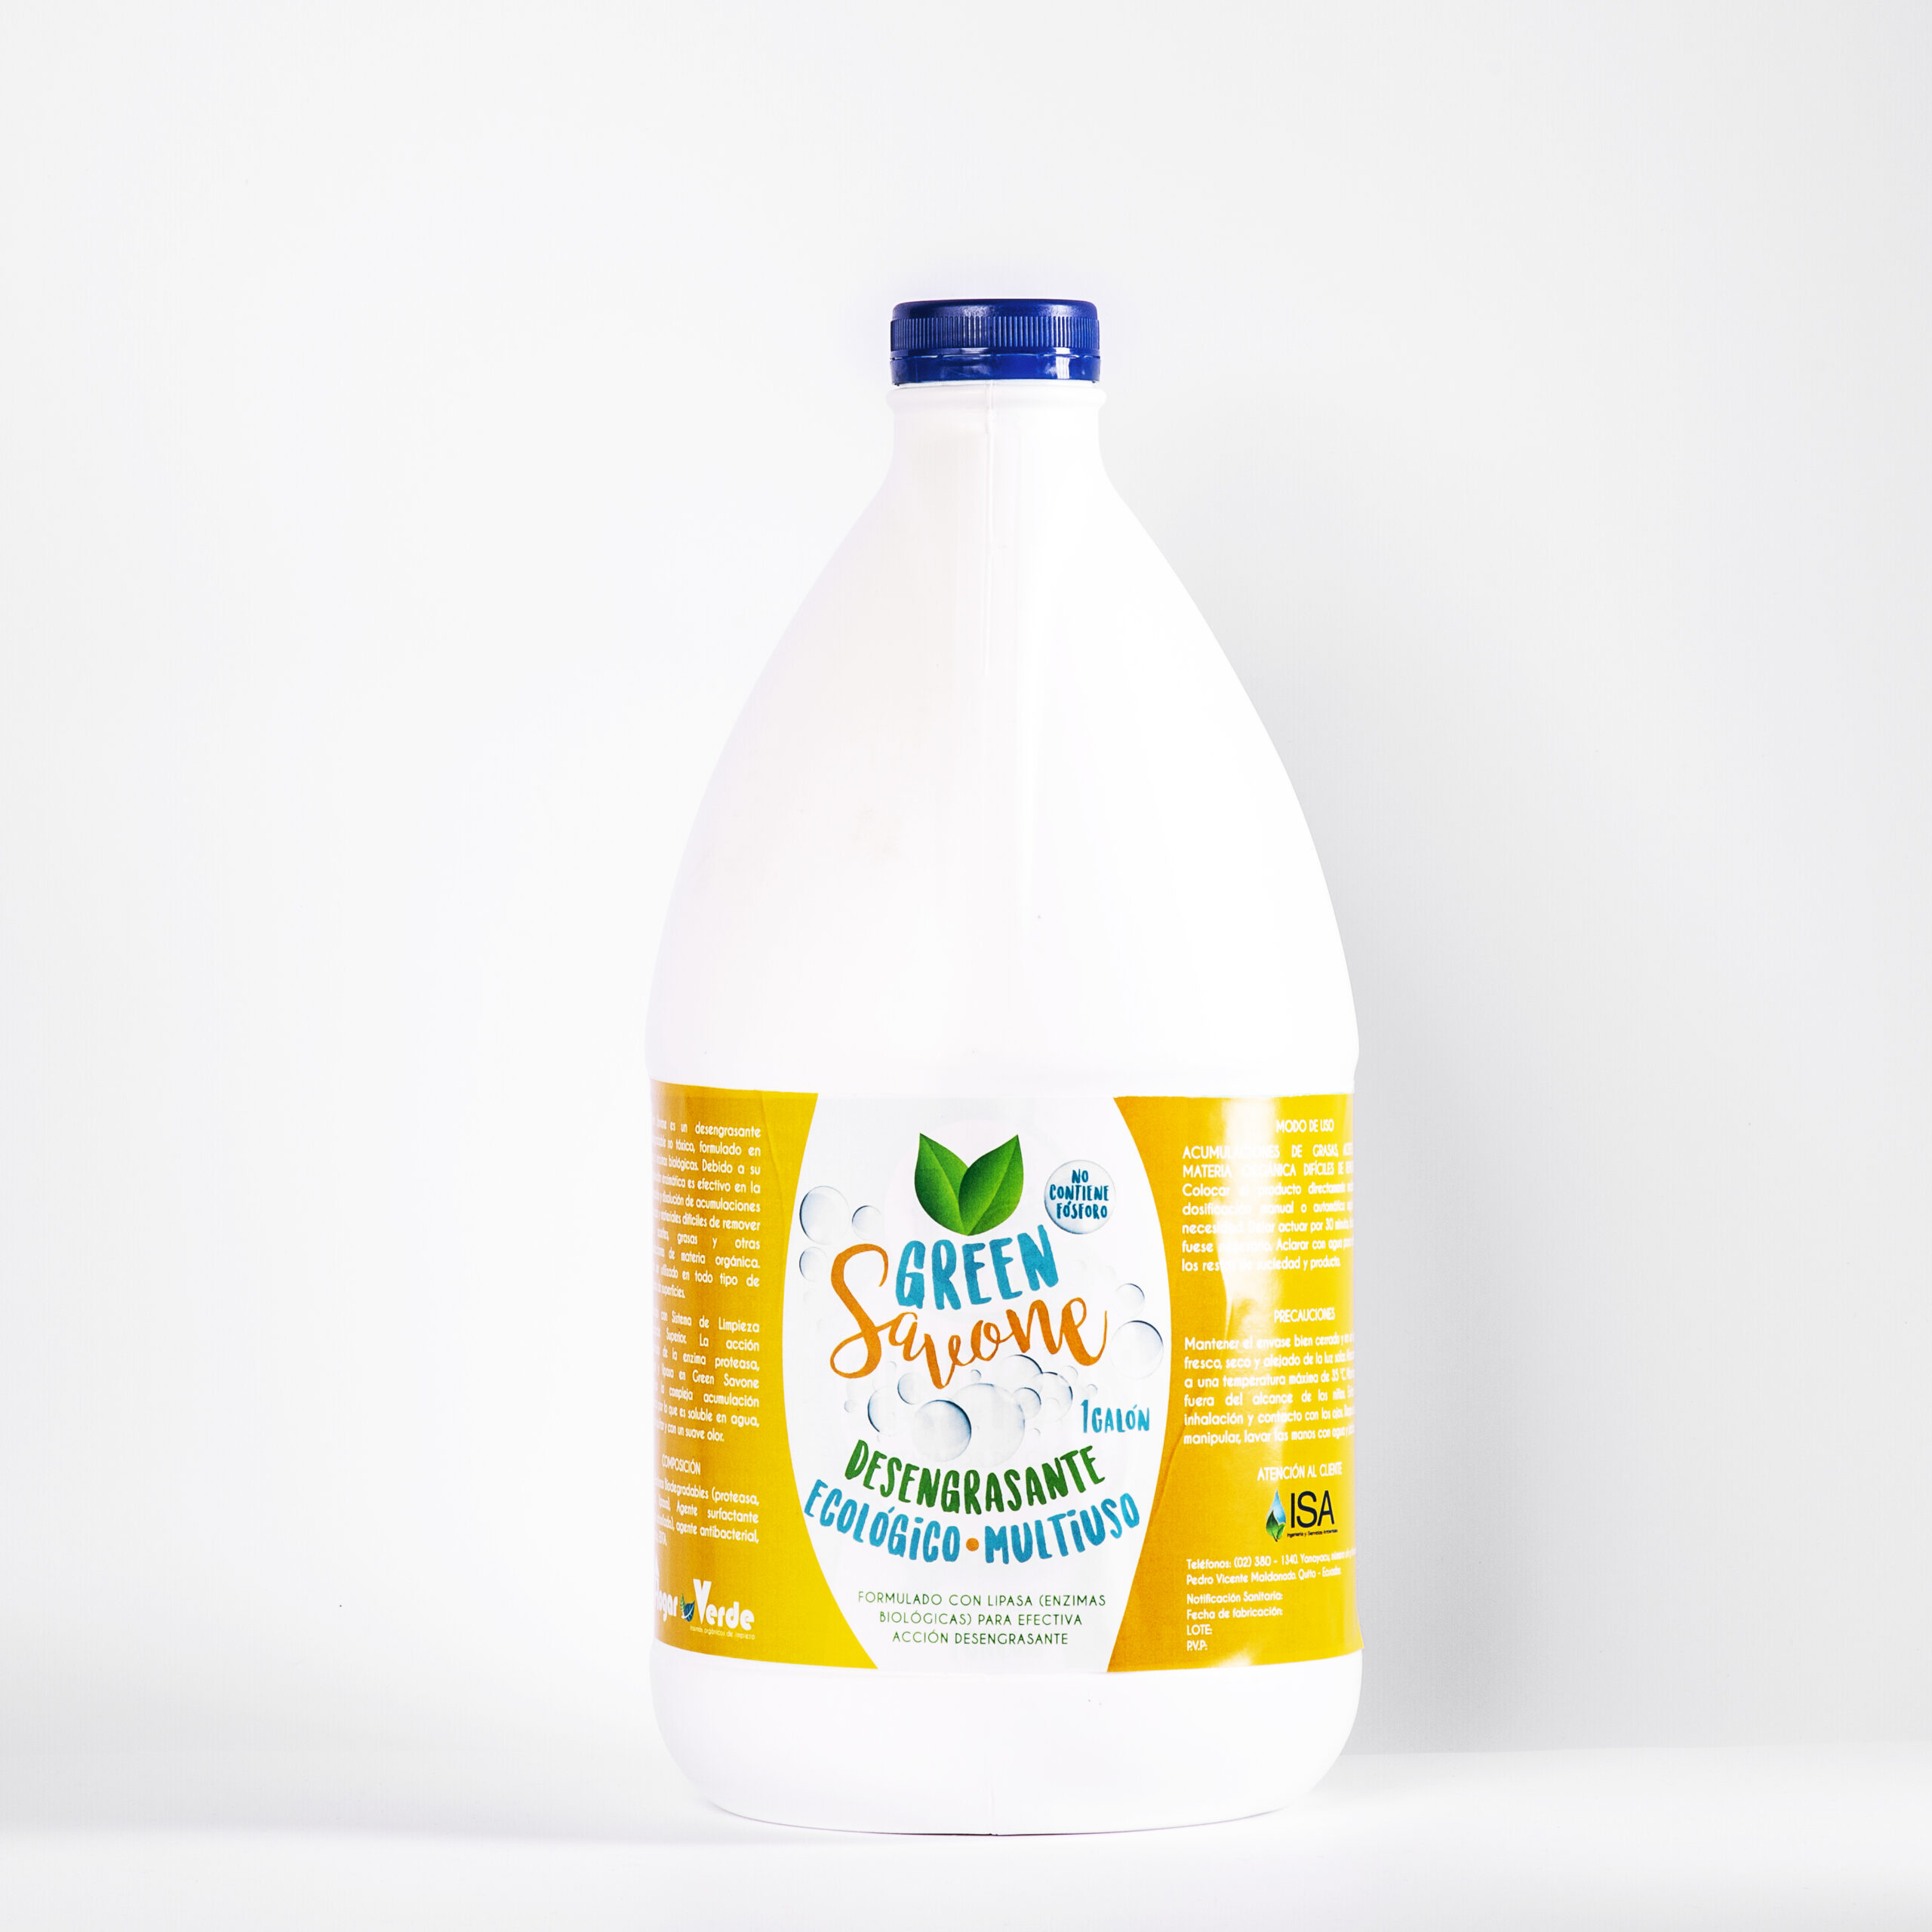 .Green Savone | Detergente De Ropa | Biodegradable Para Bebé | Galón